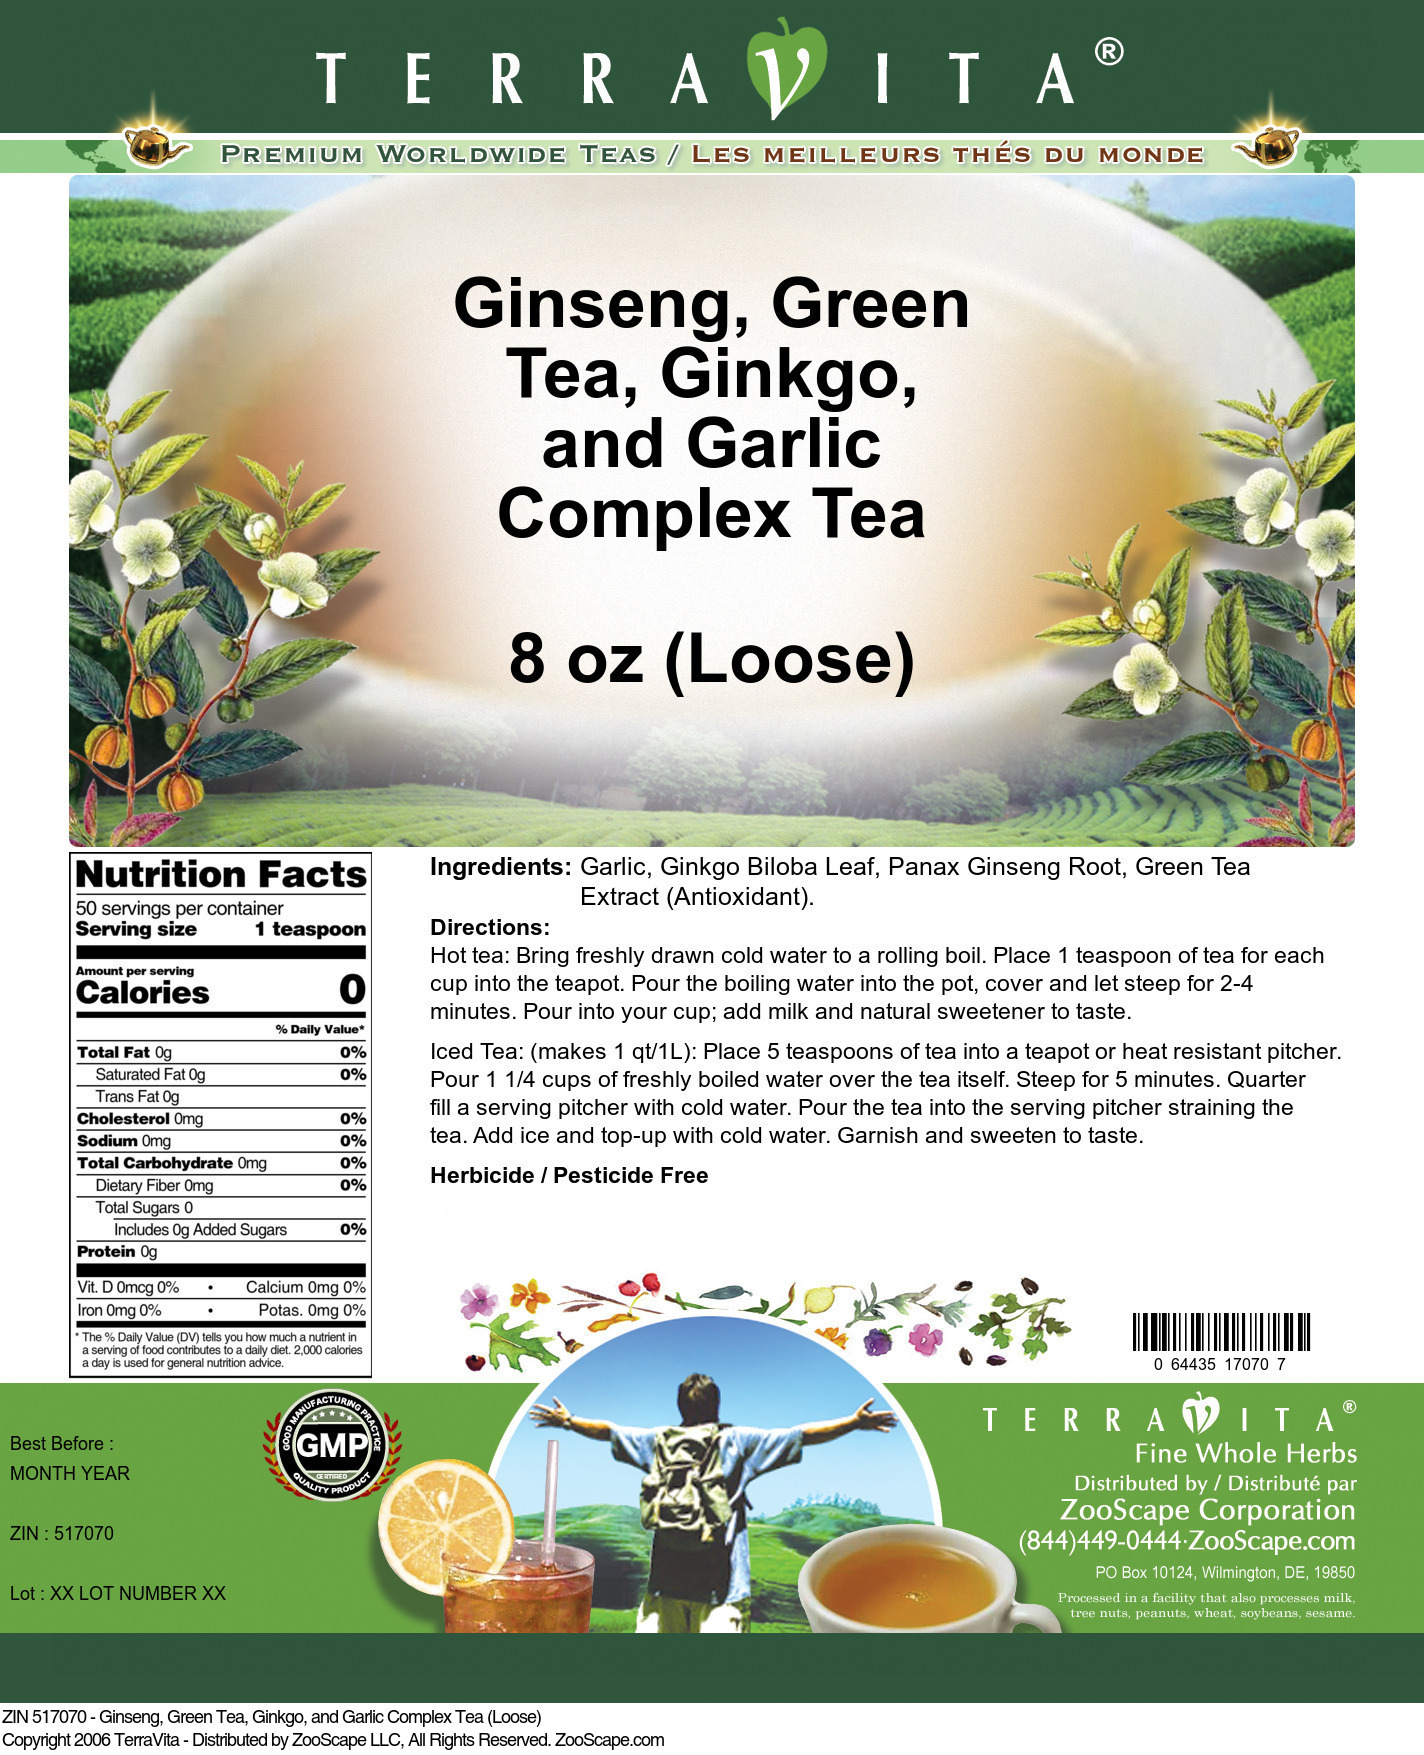 Ginseng, Green Tea, Ginkgo, and Garlic Complex Tea (Loose) - Label